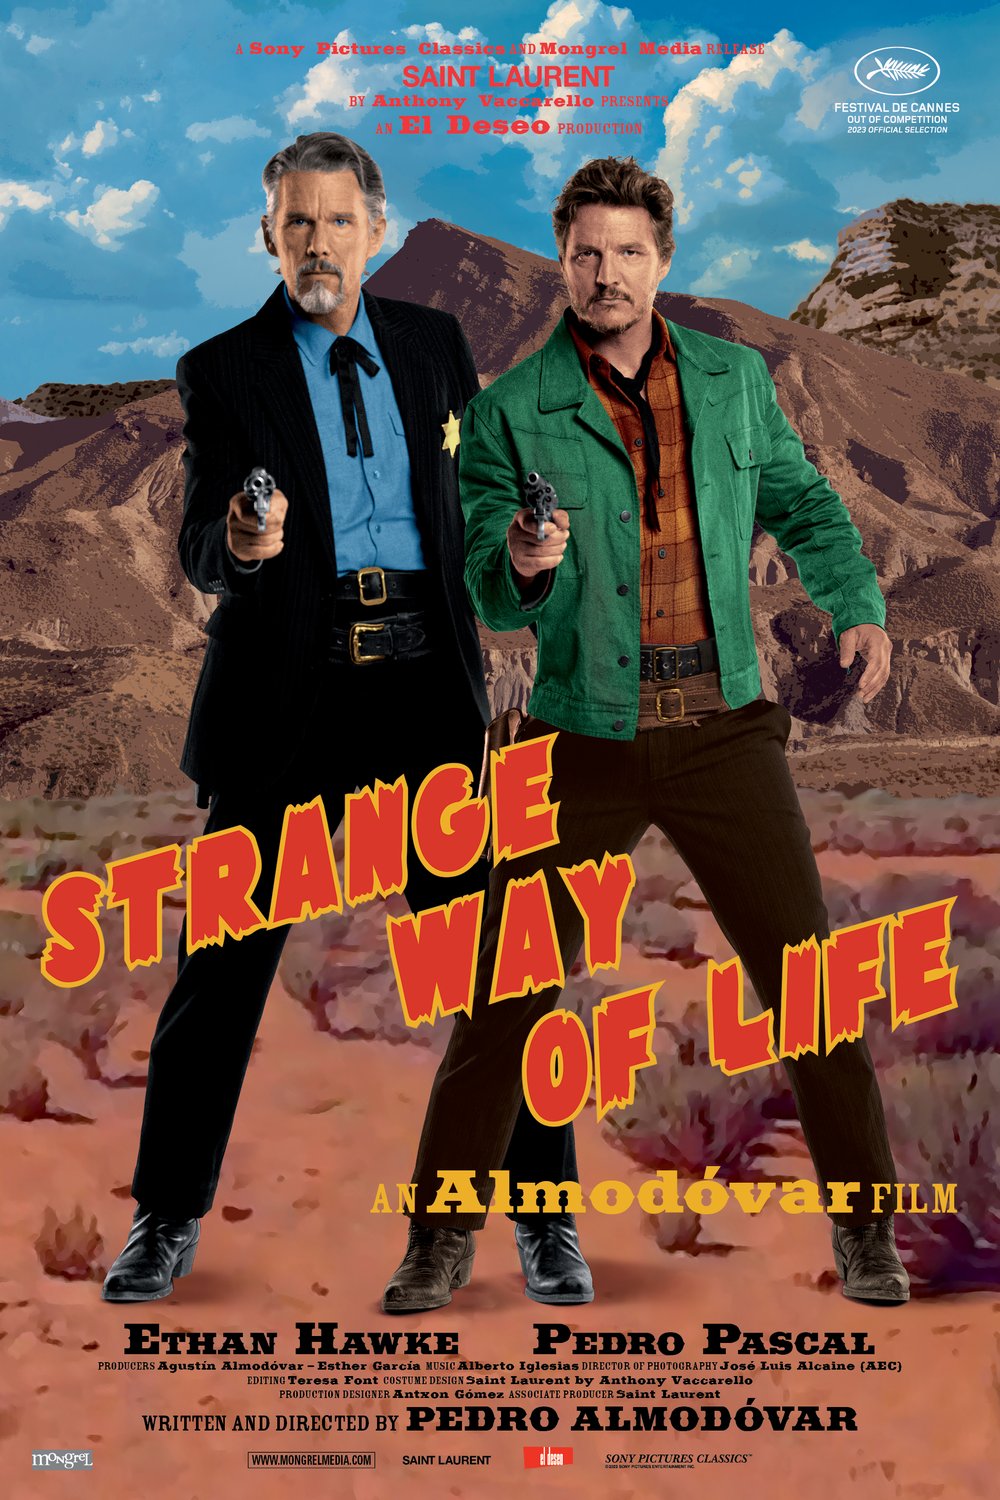 Poster of the movie Extraña forma de vida